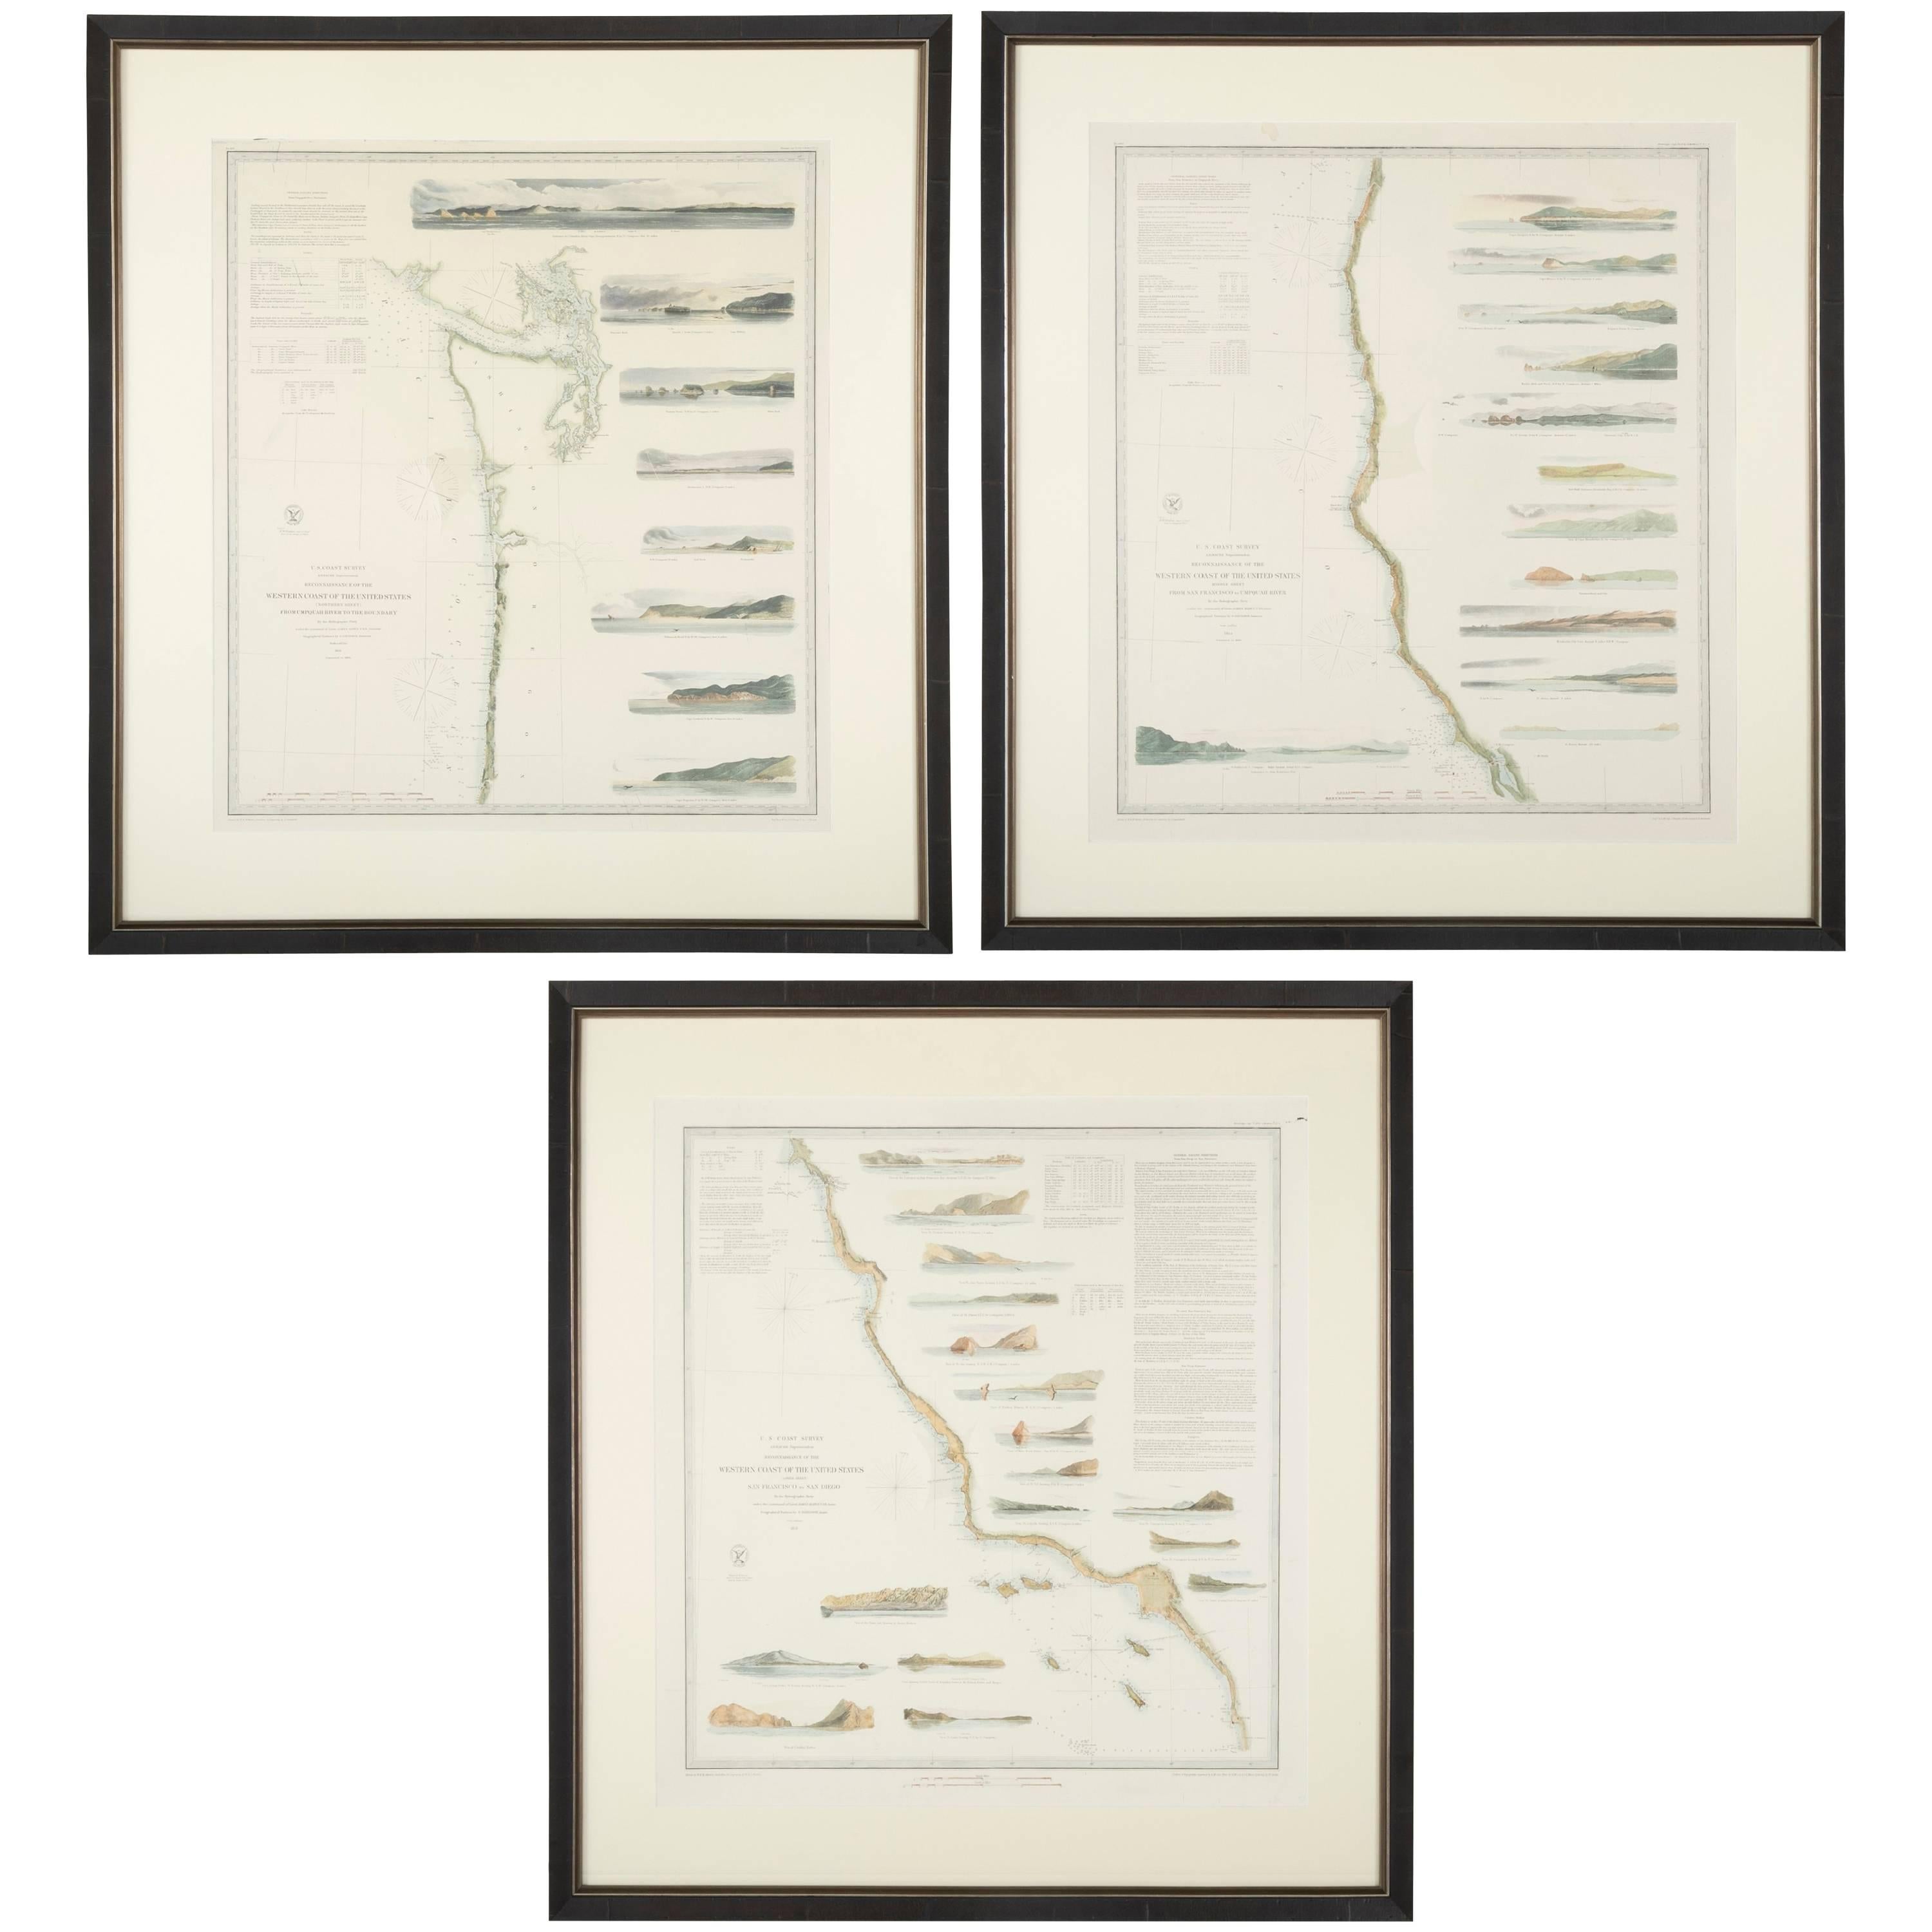 Set of Three Mid 19th Century Charts of the California Coast